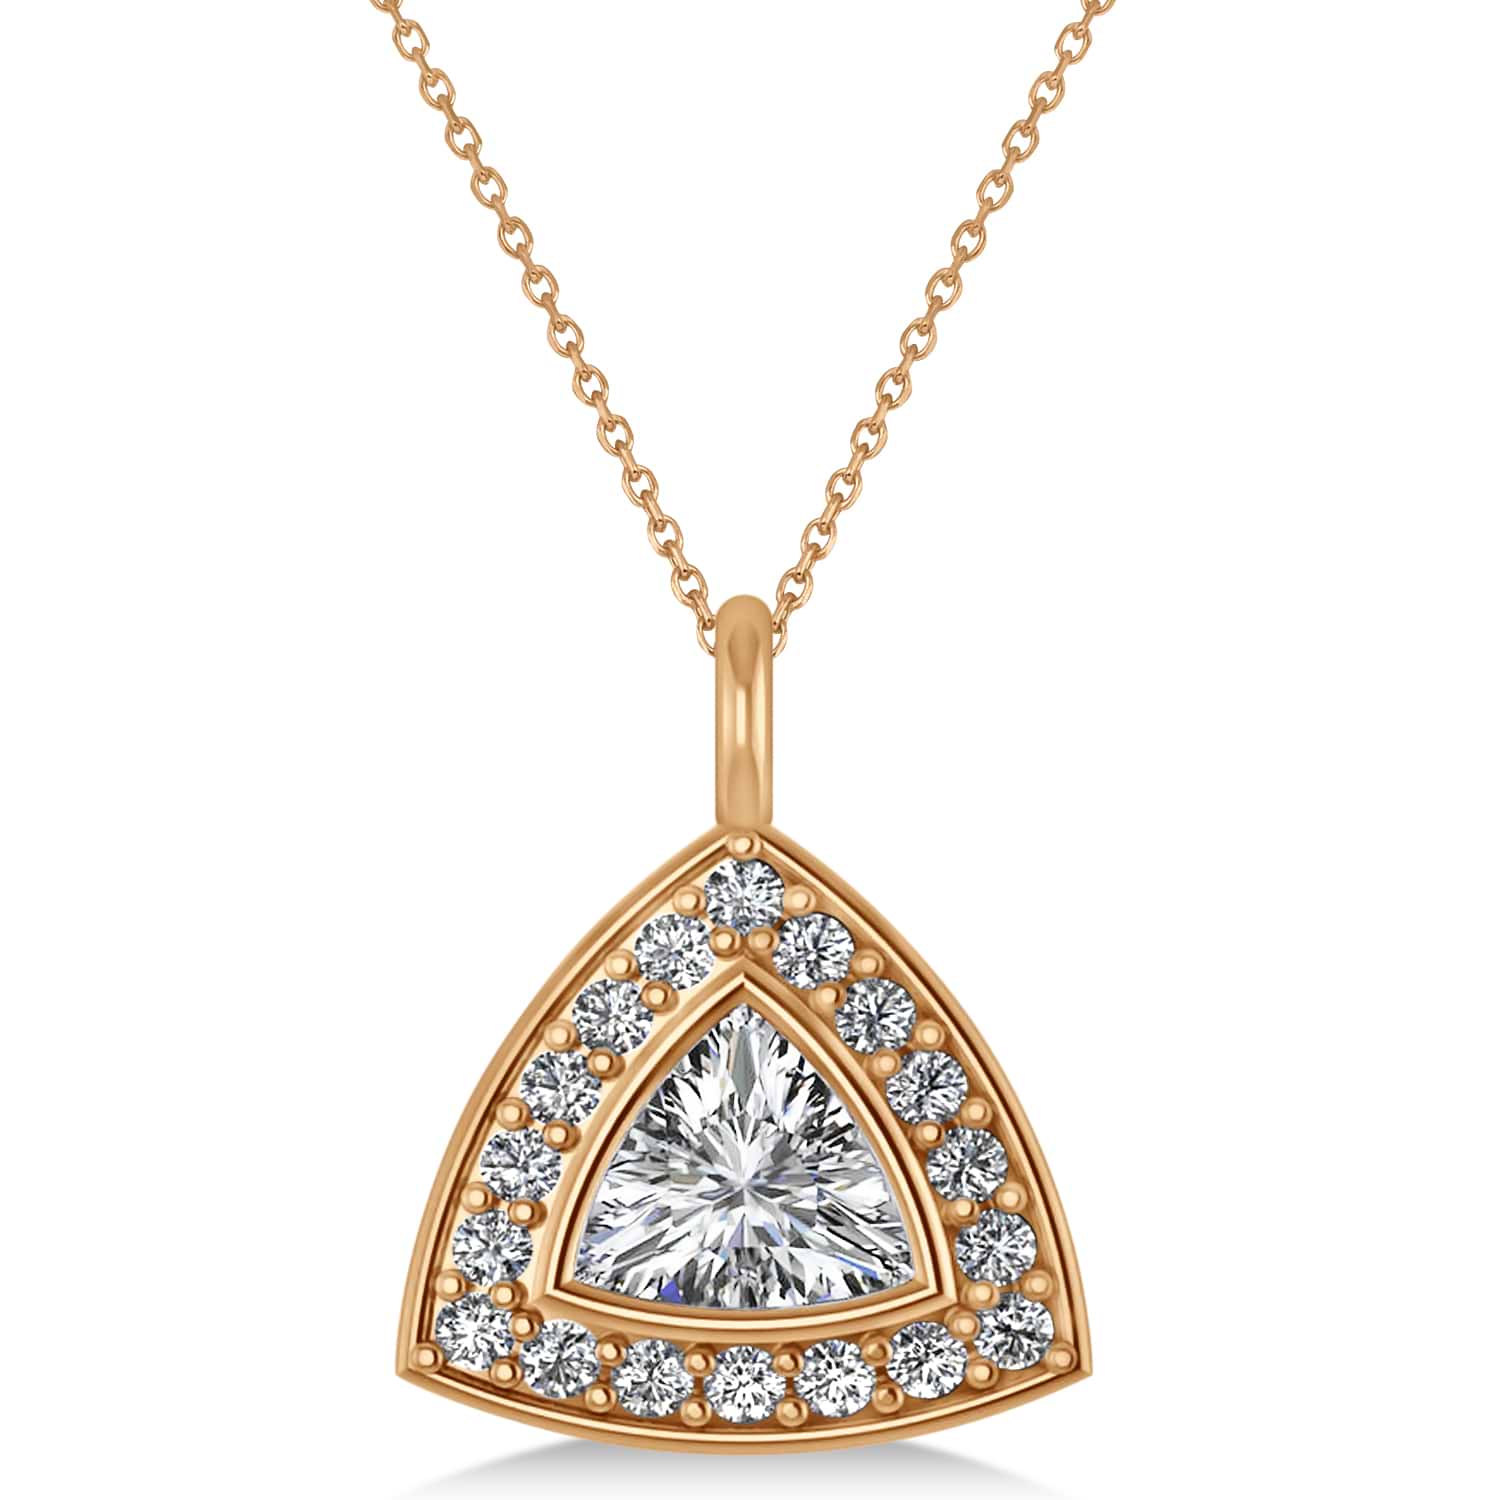 Diamond Trillion Cut Halo Pendant Necklace 14k Rose Gold (1.86ct)